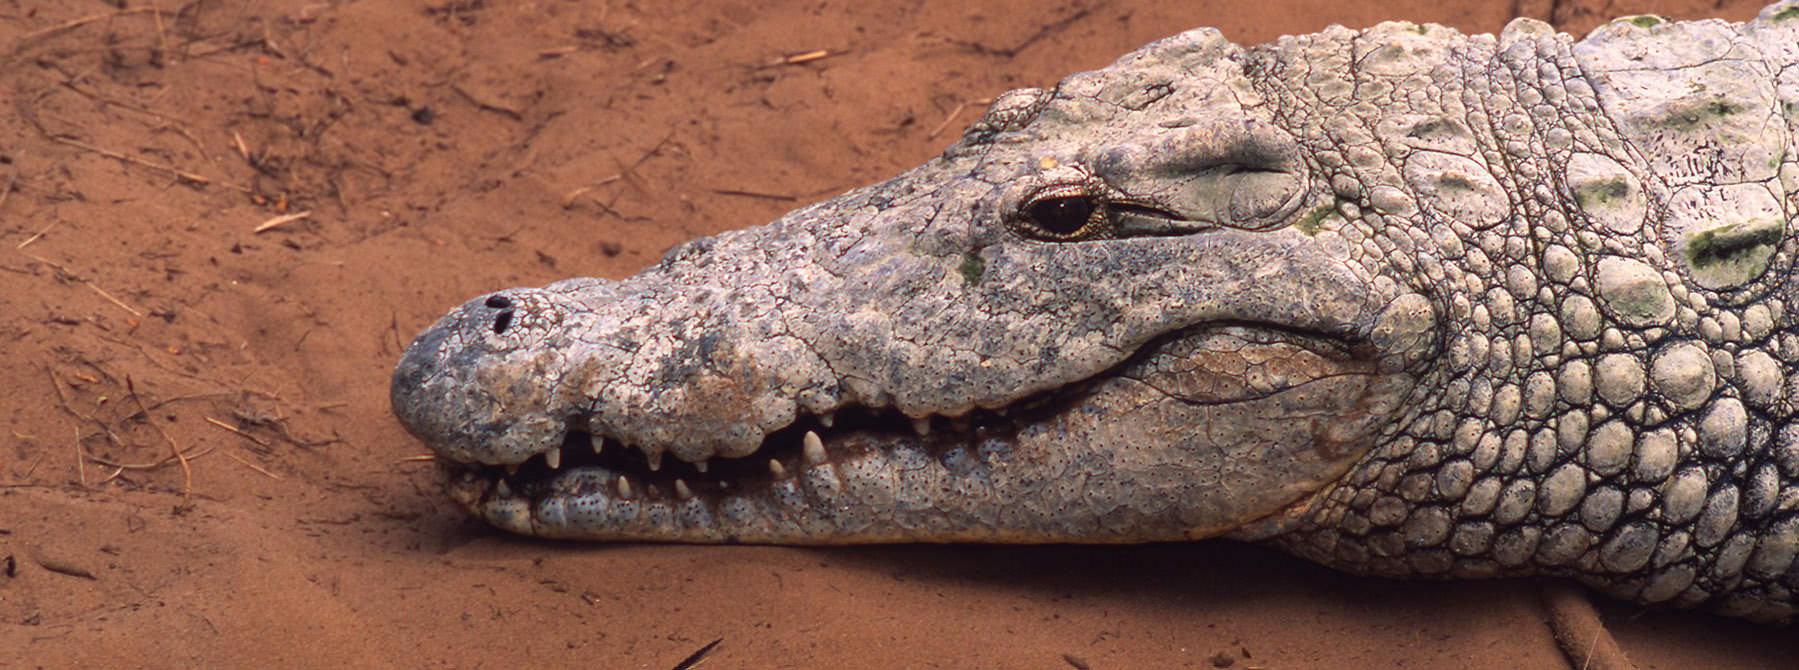 Nile Crocodile Crocodilus niloticus © Martin Harvey / WWF